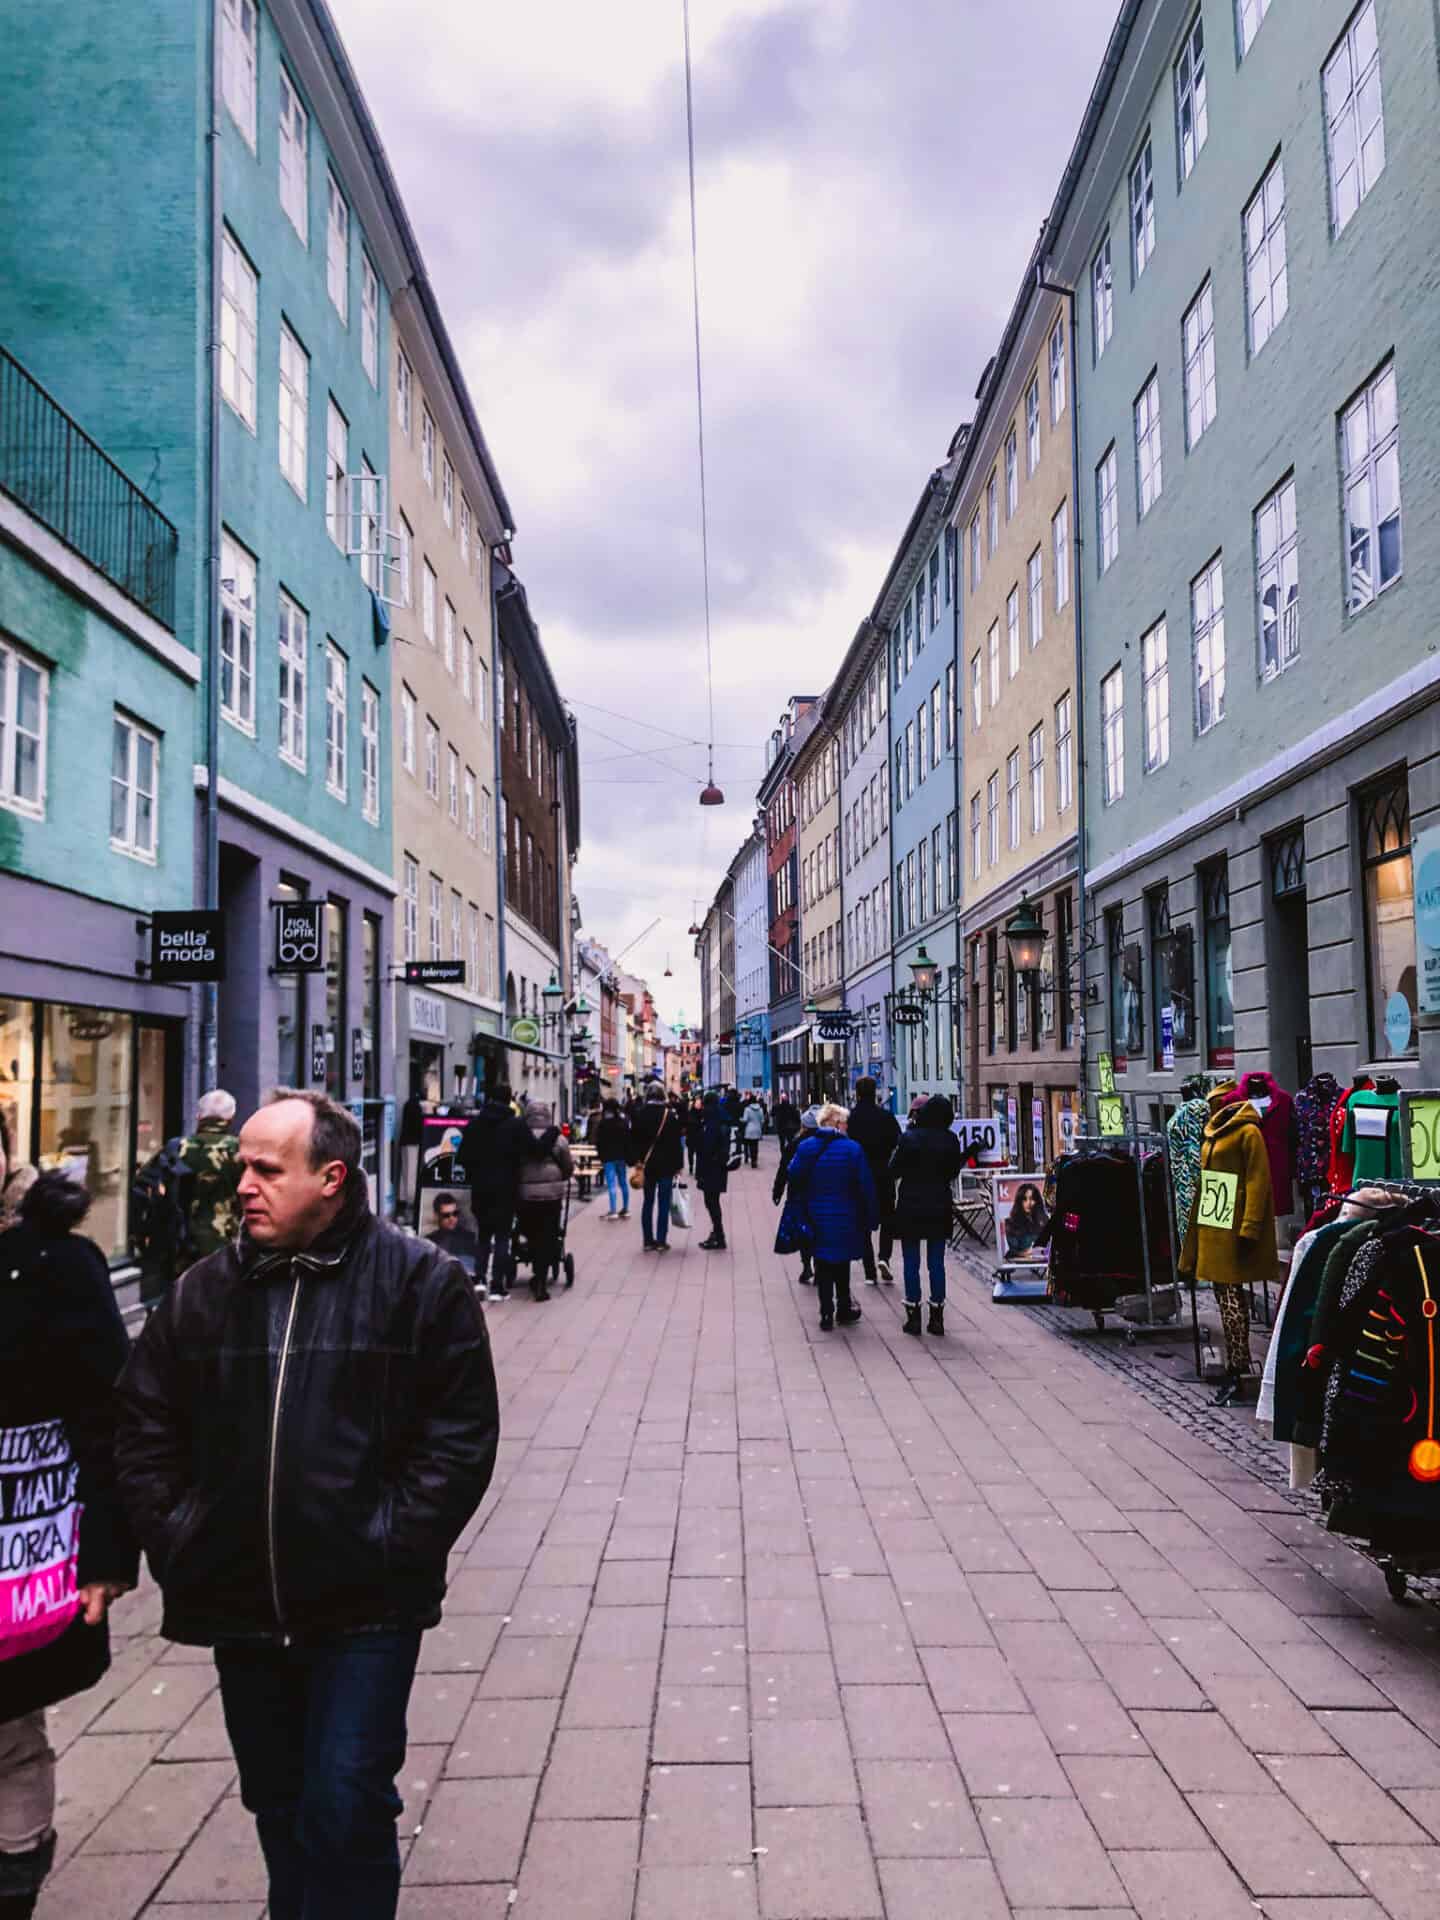 Copenhagen street with colorful buildings